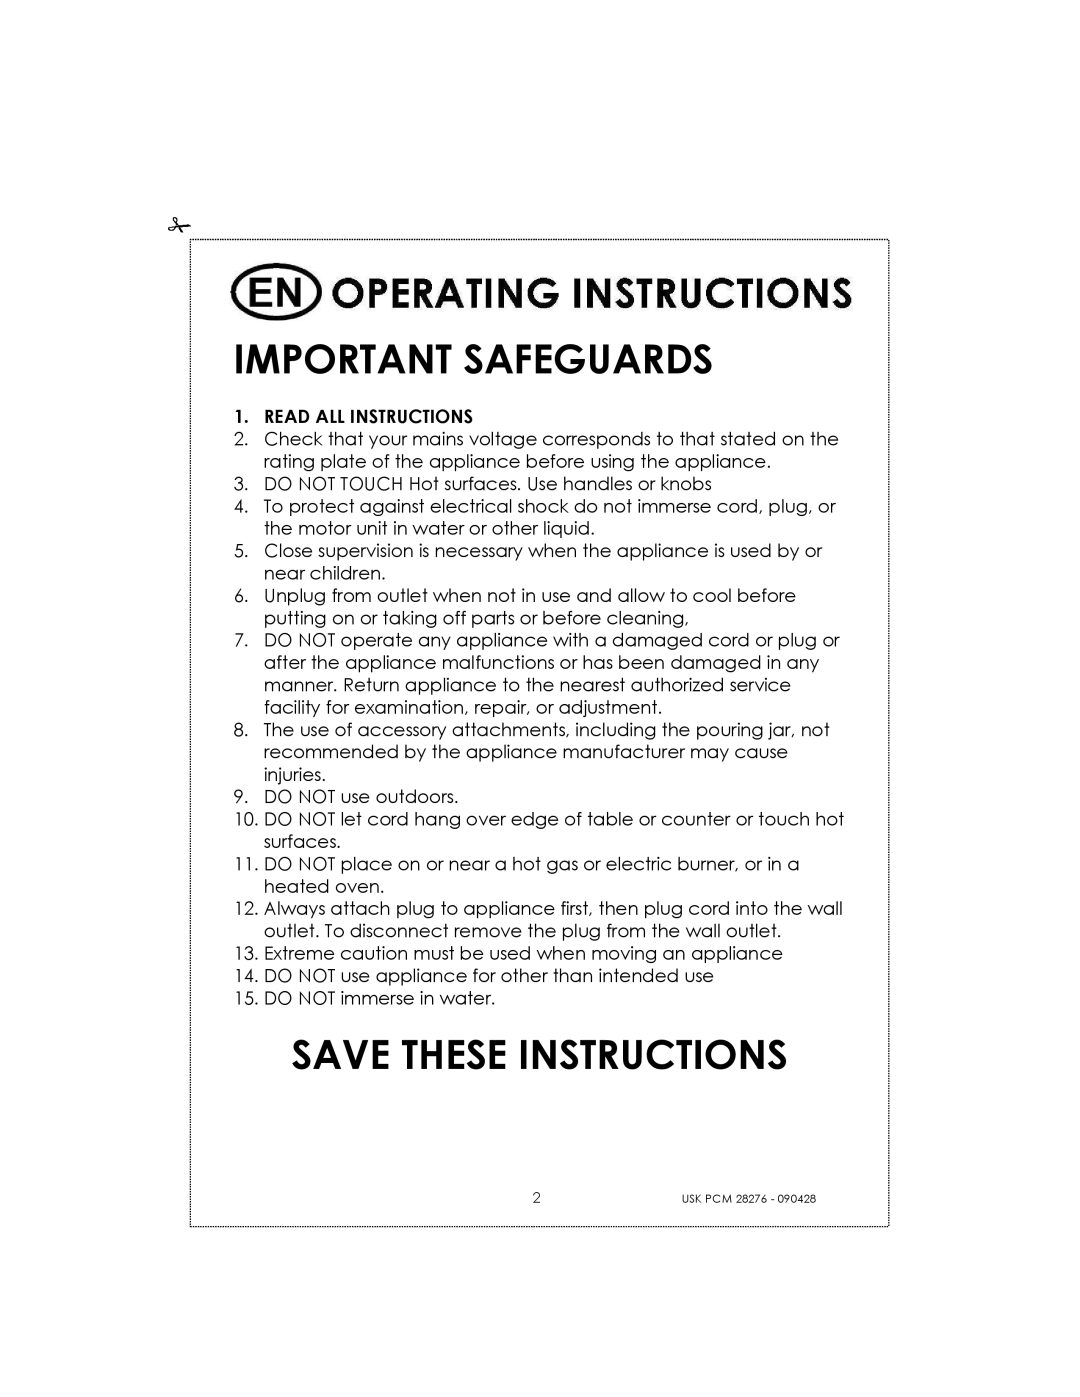 Kalorik USK PCM 28276 manual Important Safeguards, Save These Instructions 